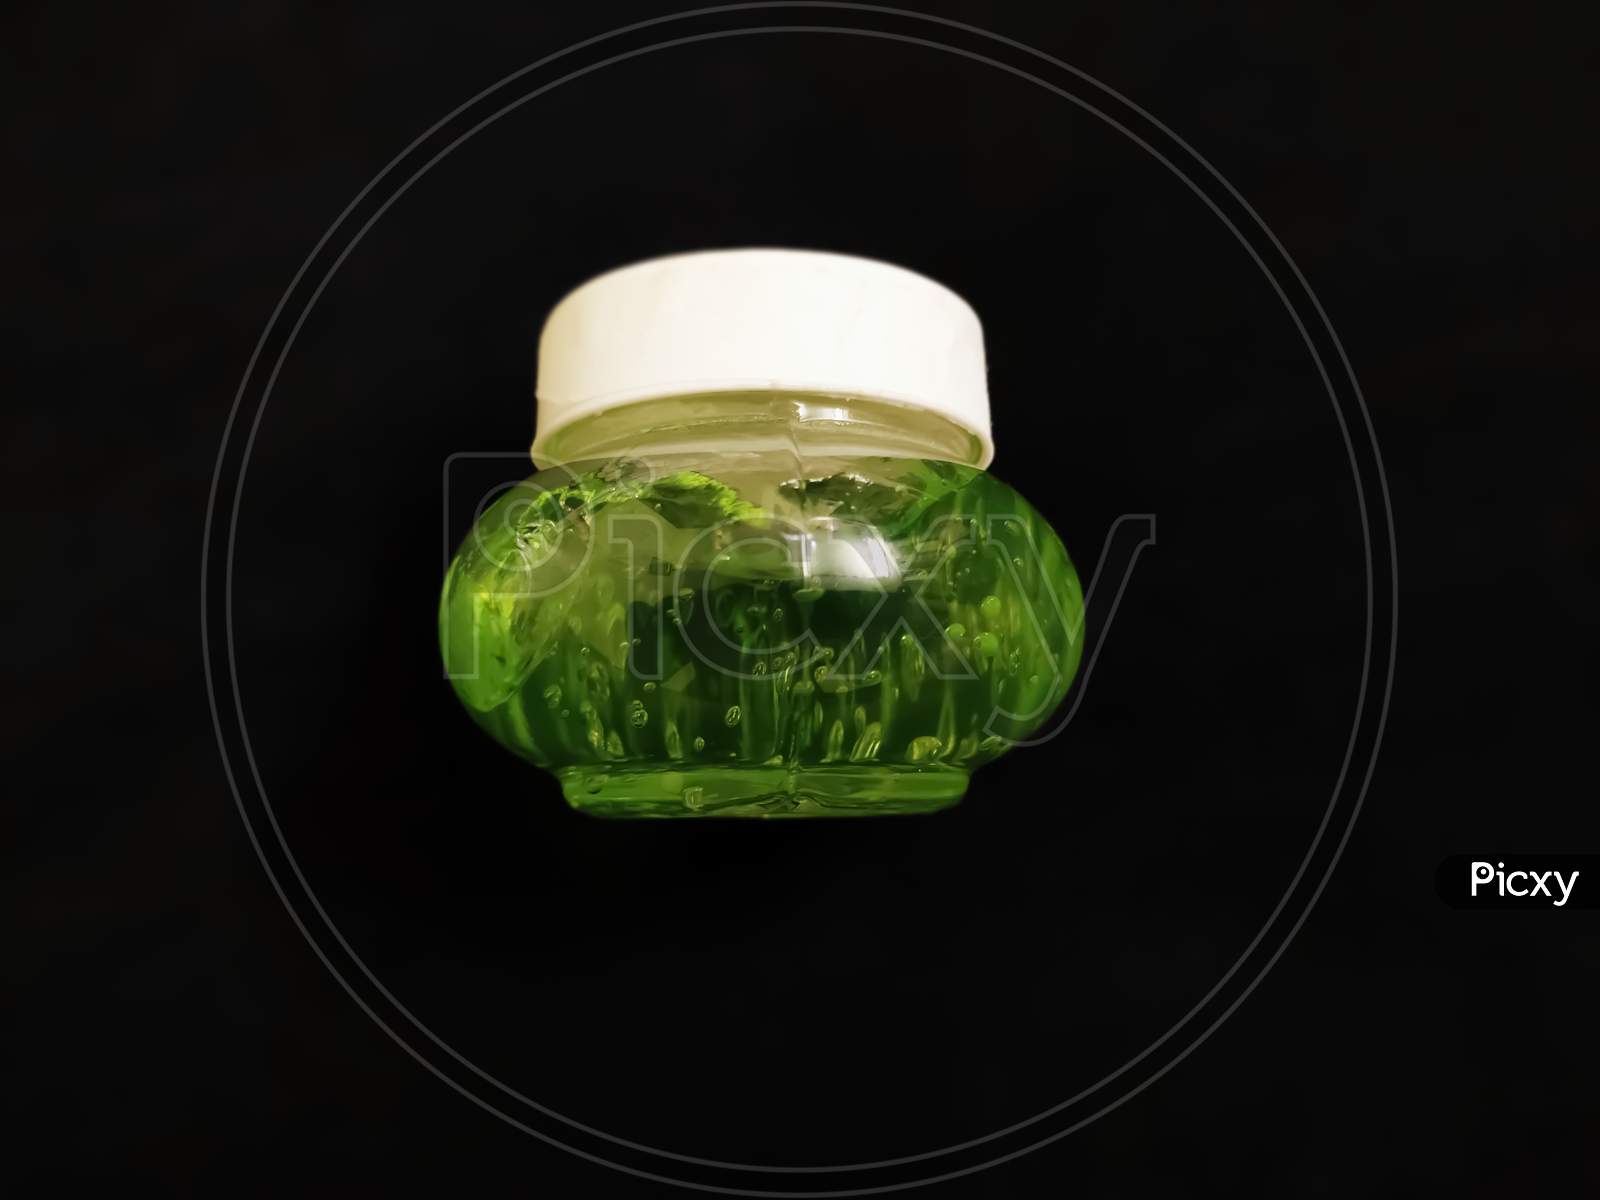 Aloe Vera gel in glass jar with black background